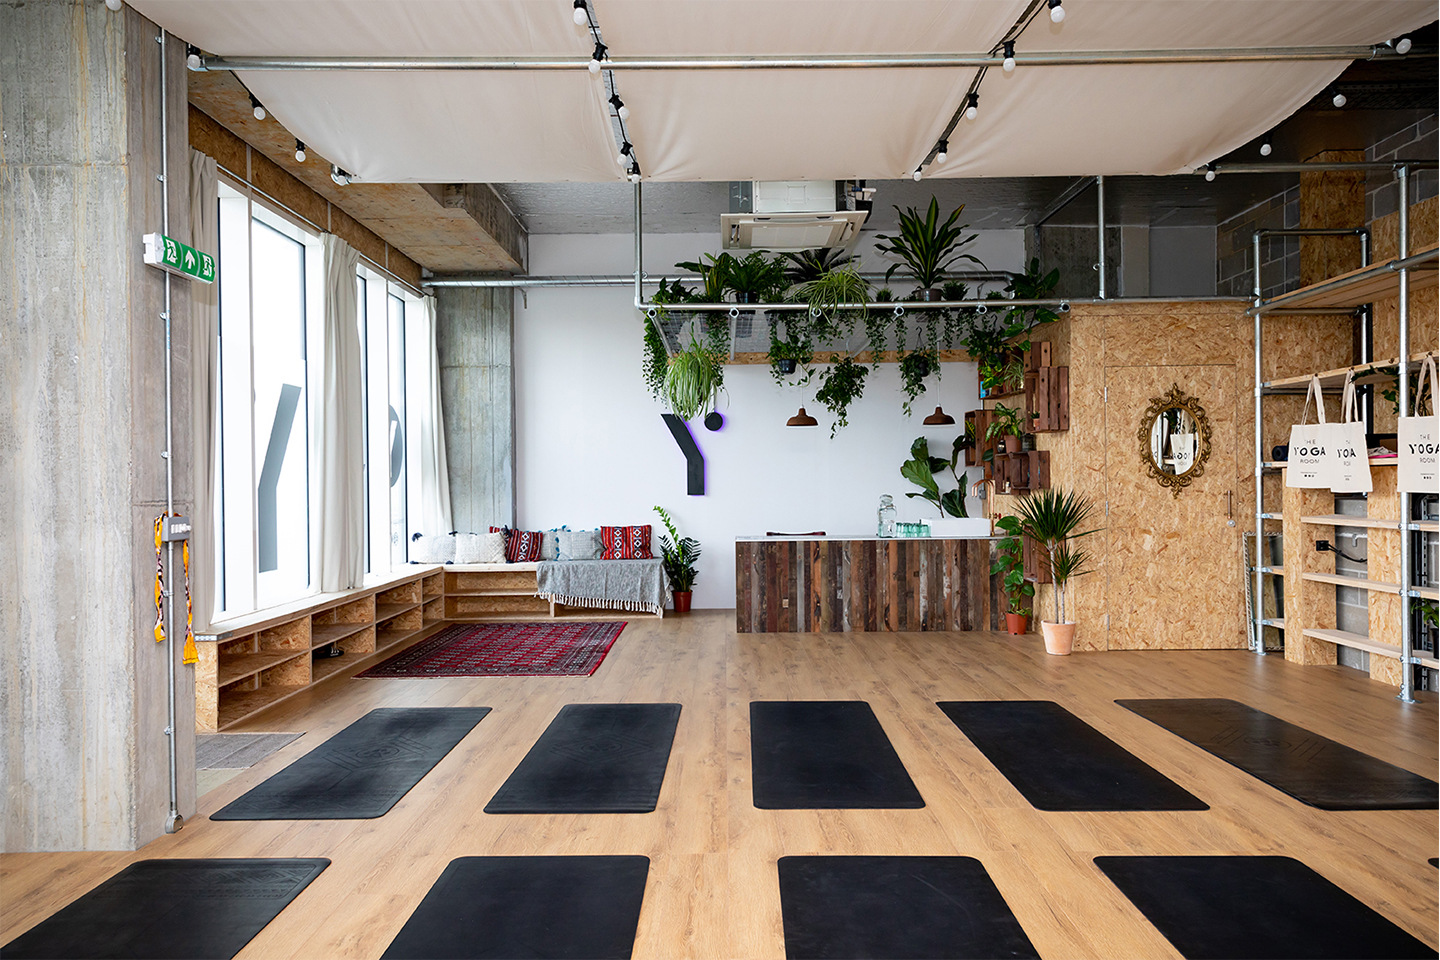 Branding a yoga studio that's bringing community to South London - Paiv  Creative